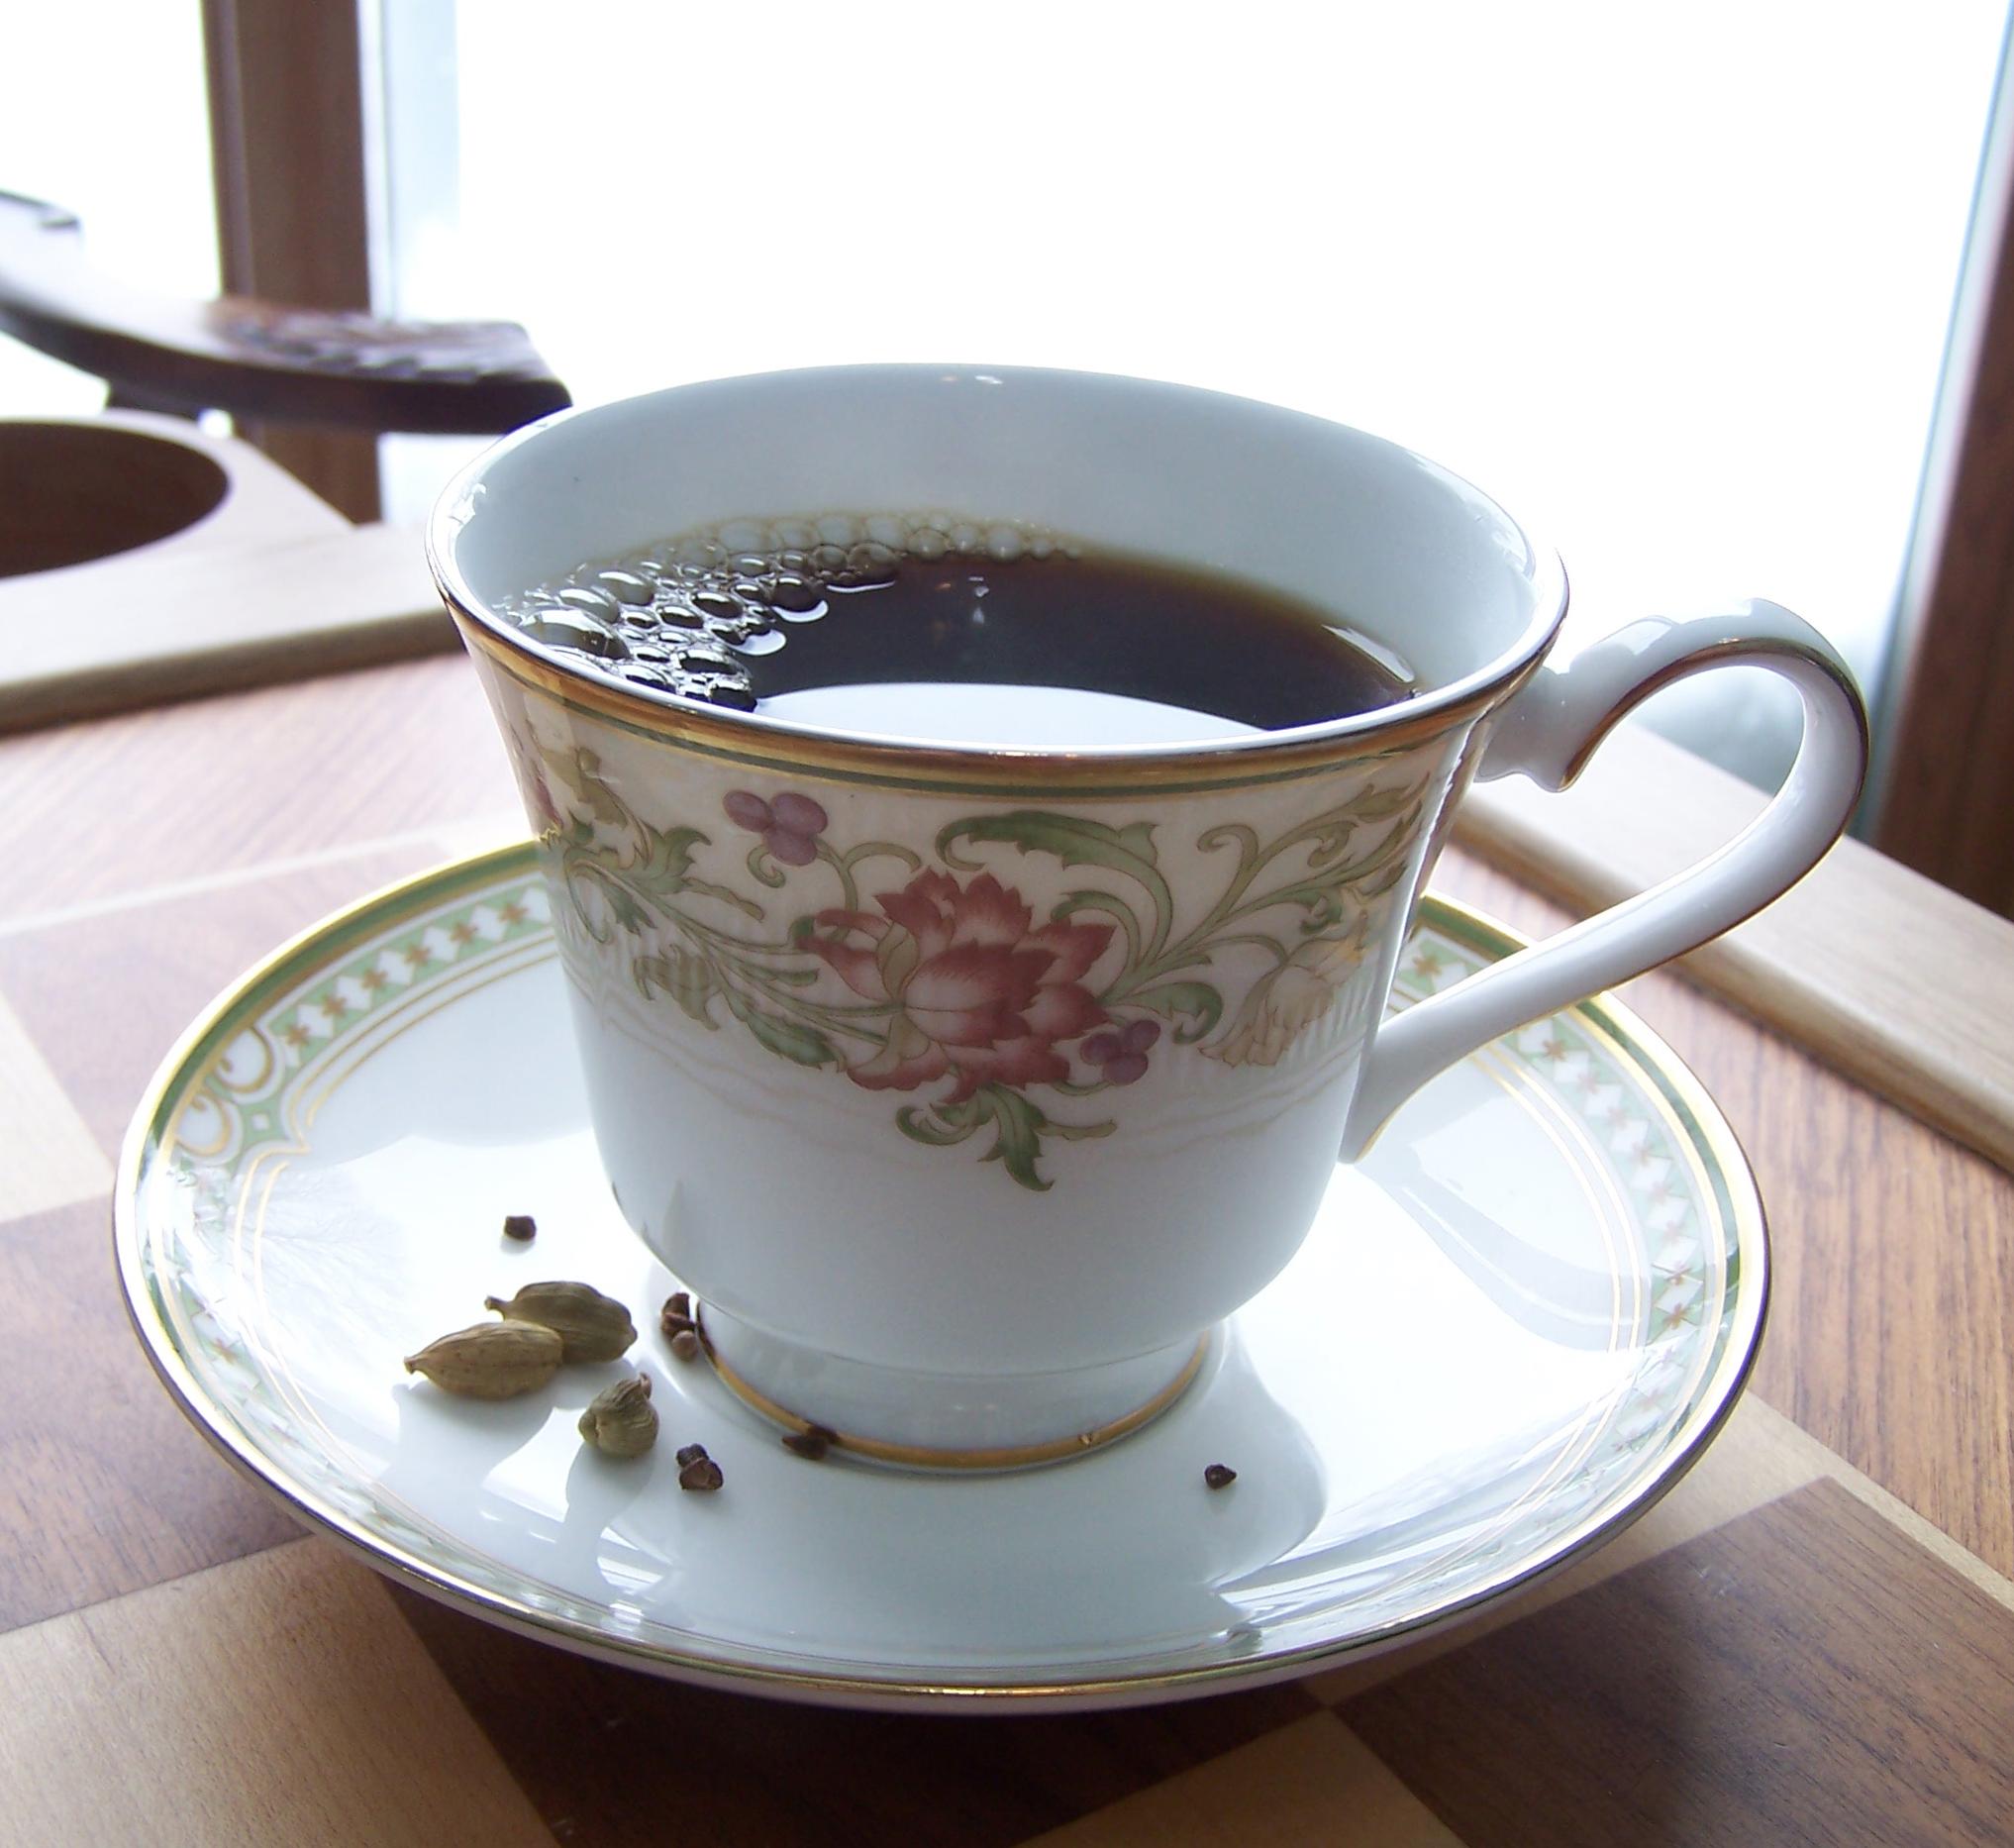  A fragrant and indulgent sip: Cardamom Coffee.